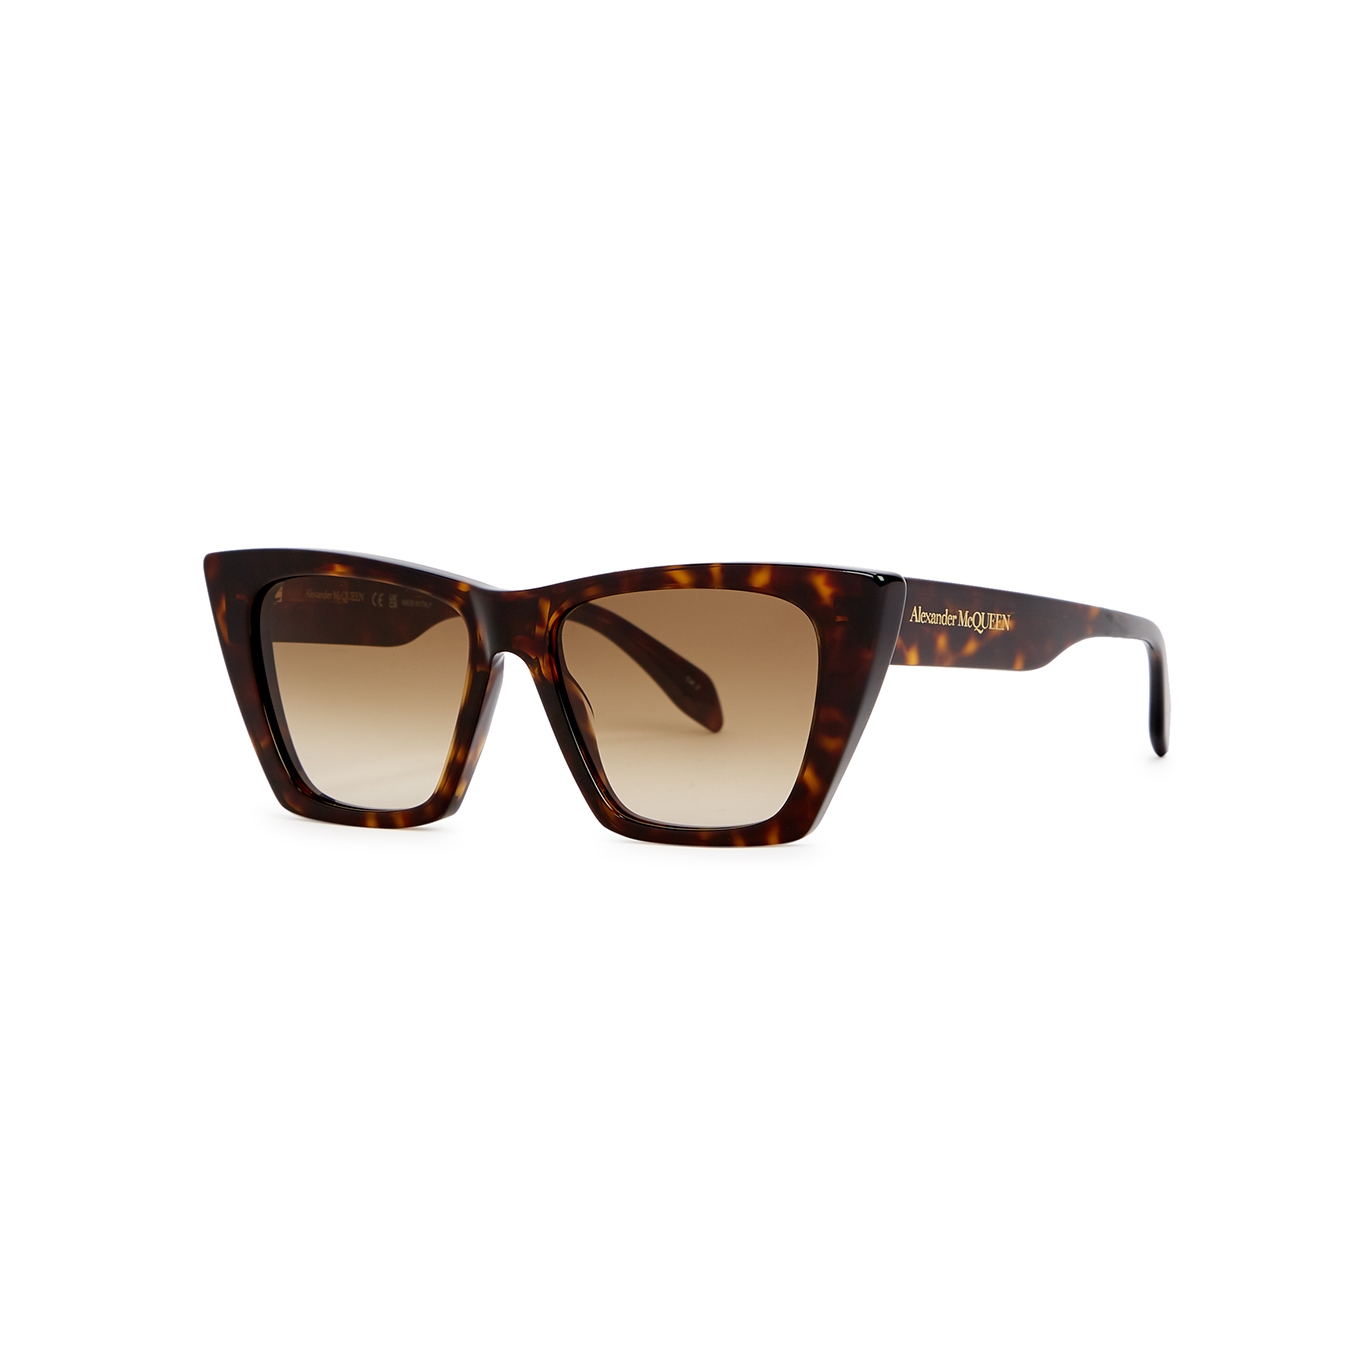 Alexander McQueen Tortoiseshell Cat-eye Sunglasses, Sunglasses